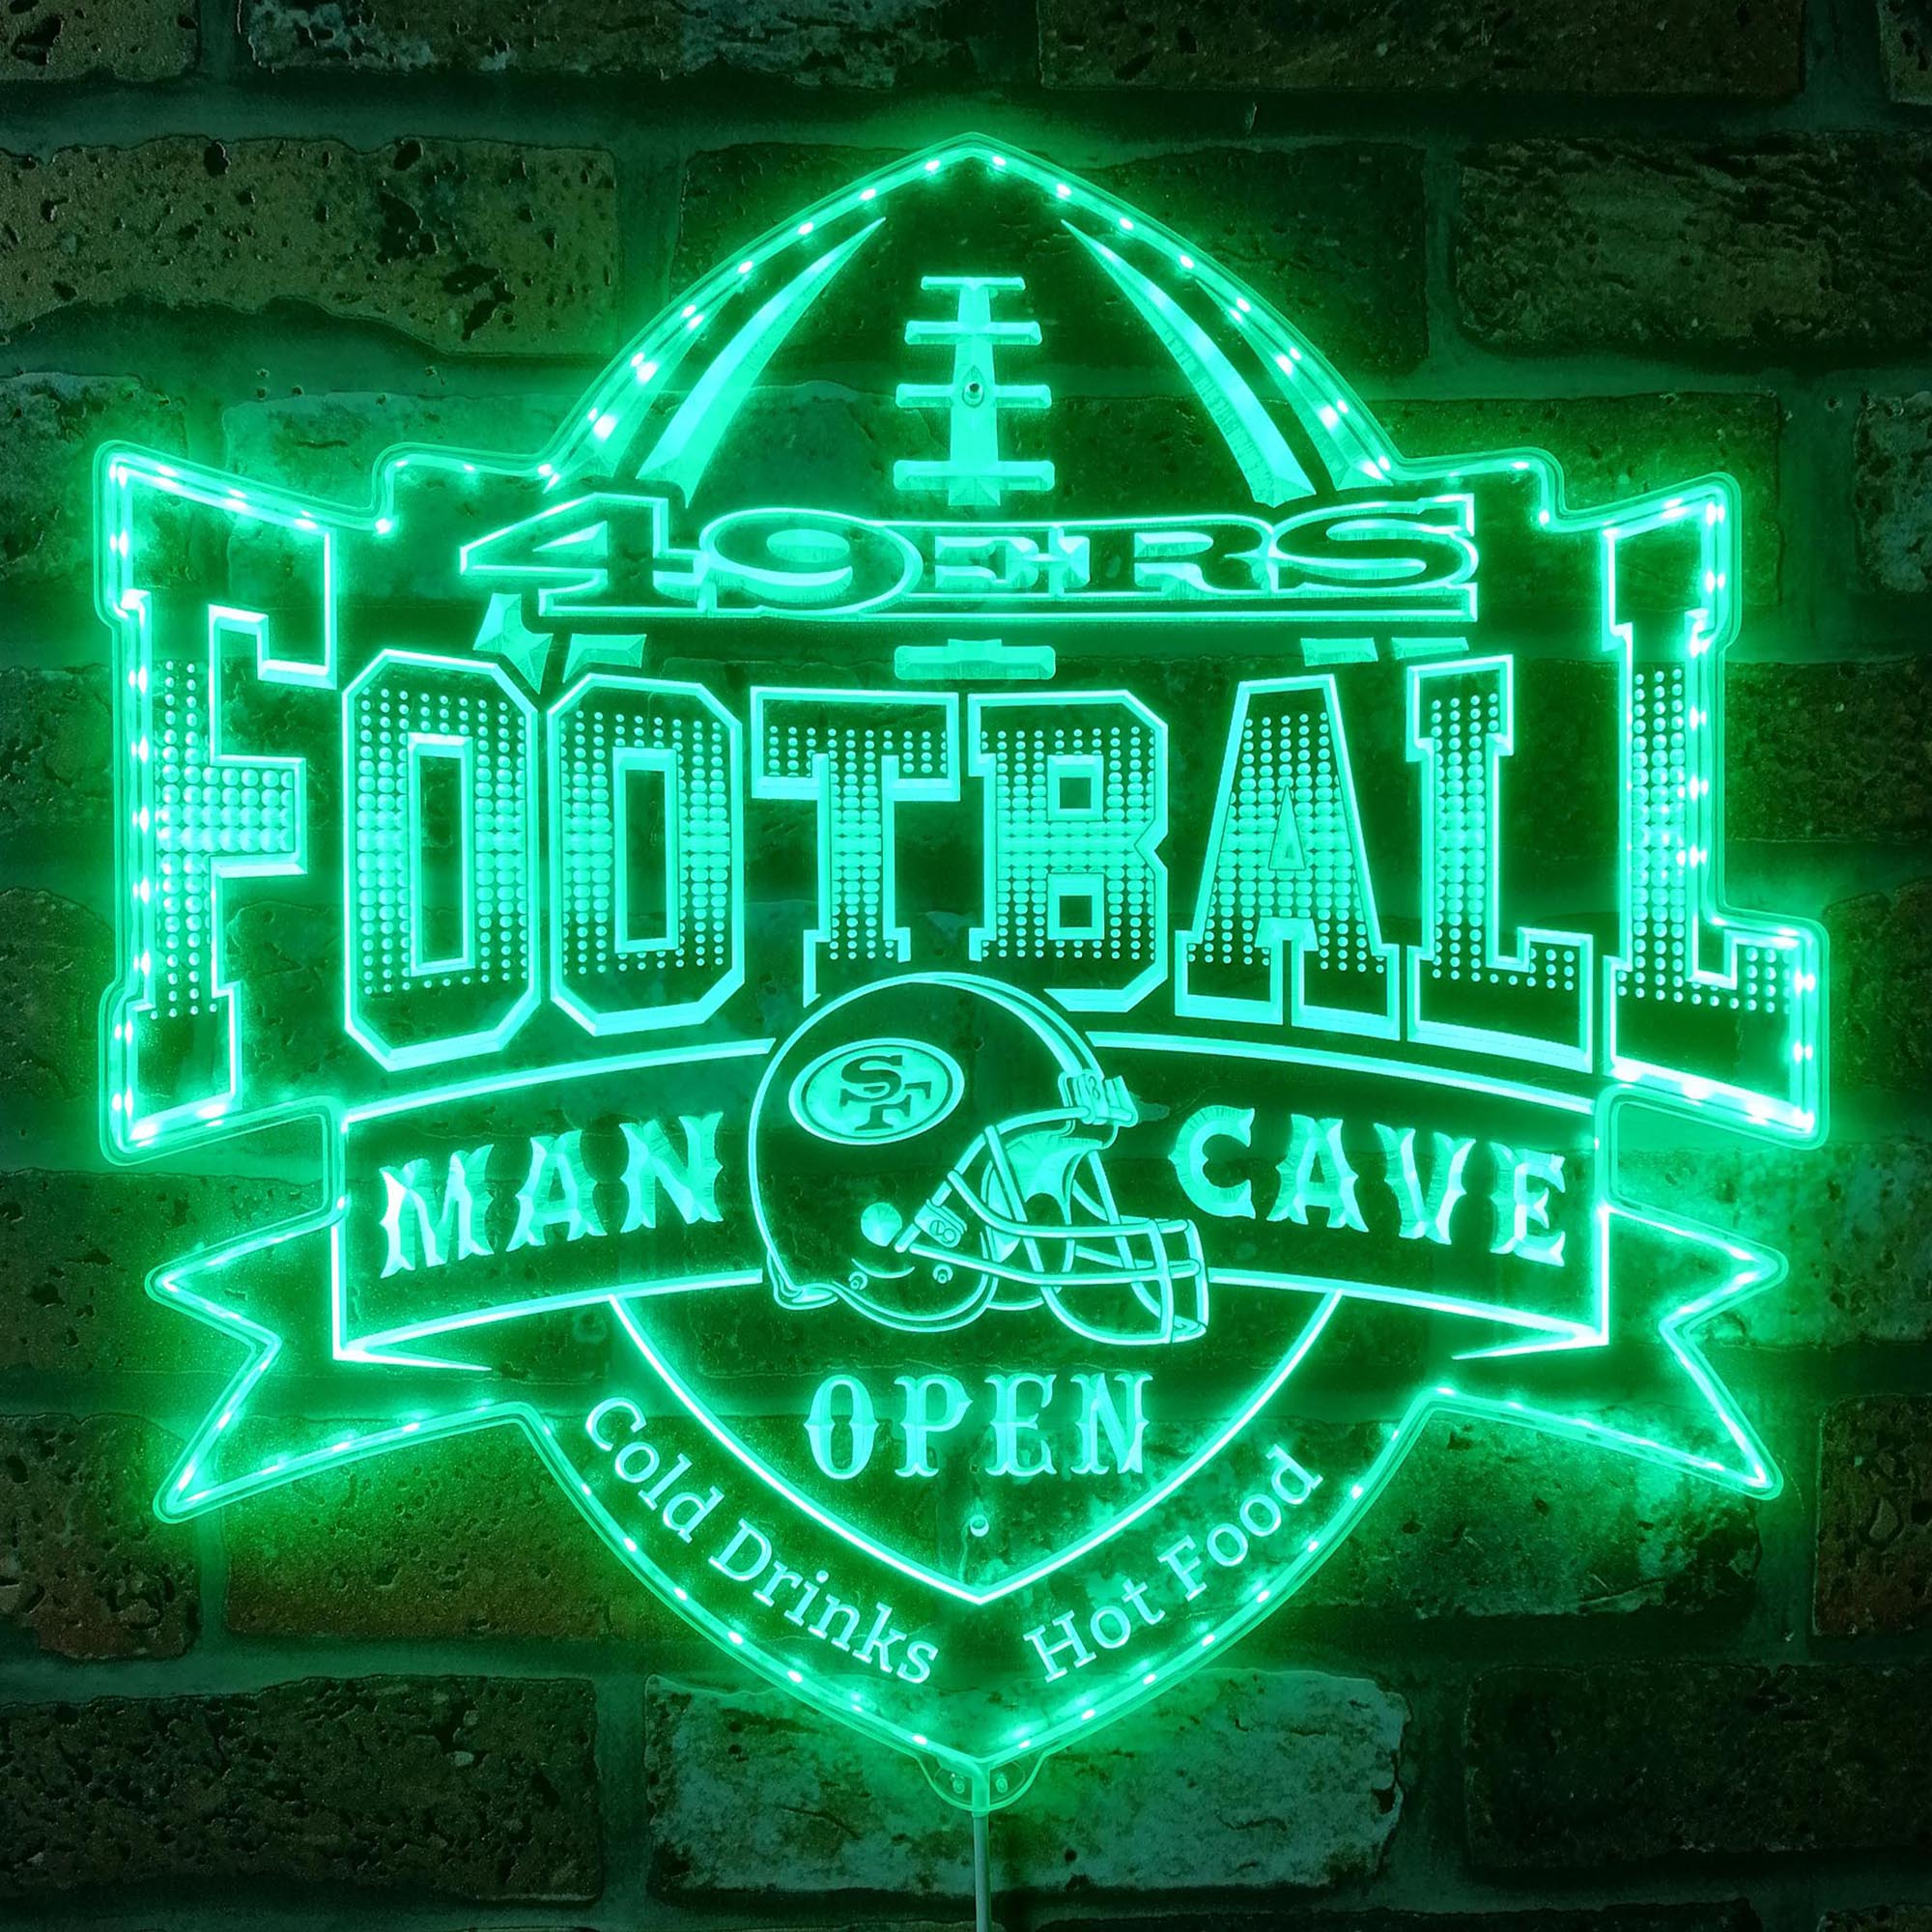 NFL San Francisco 49ers Football Dynamic RGB Edge Lit LED Sign